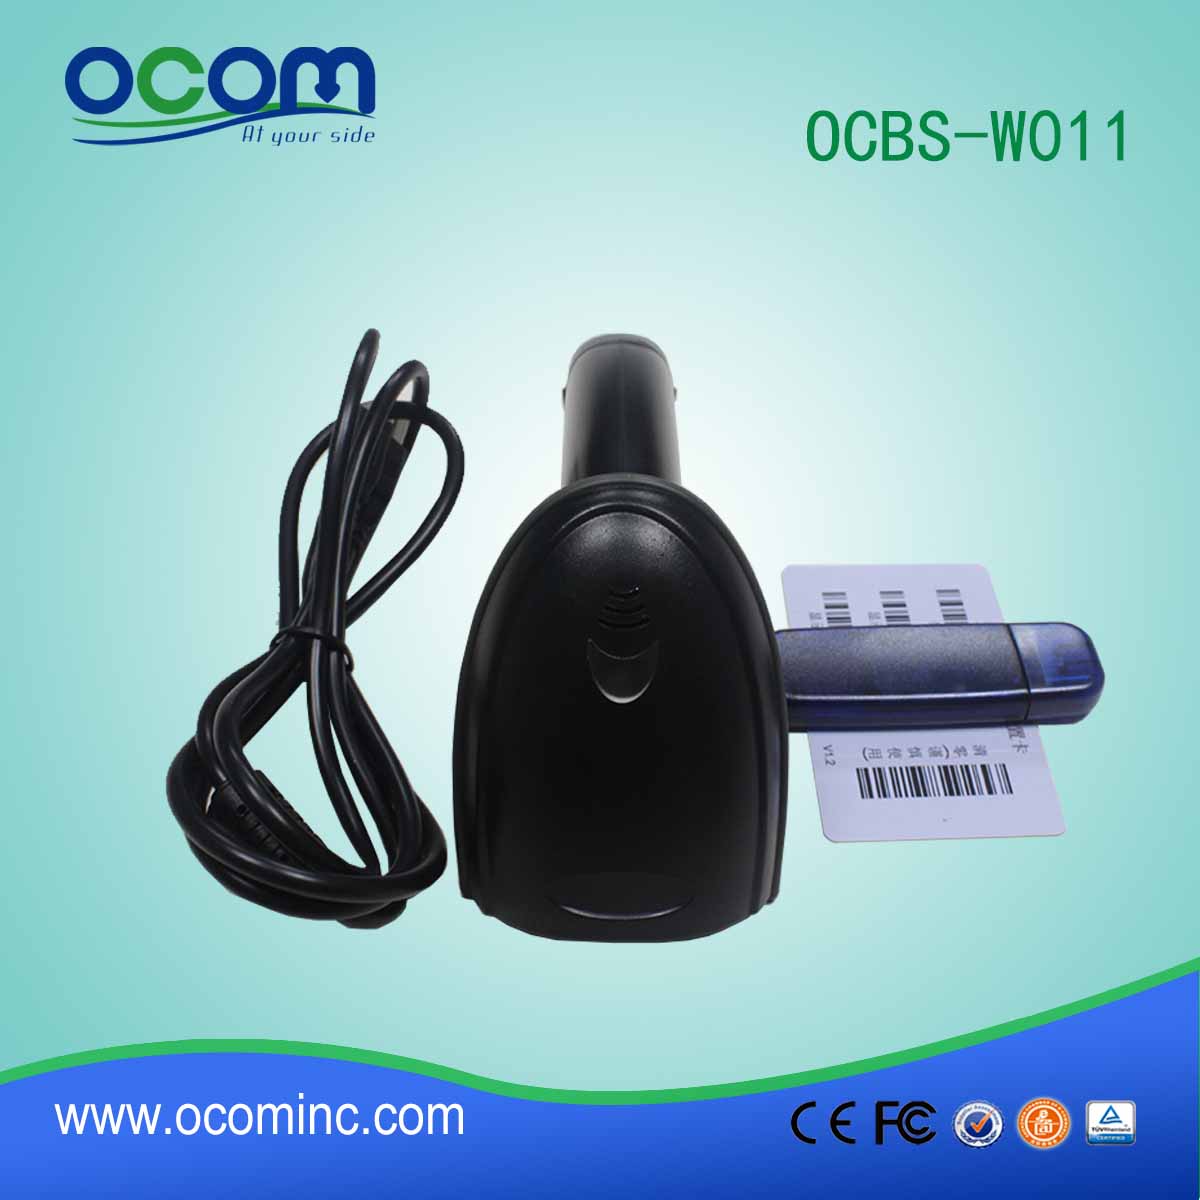 barcode scanner wireless OCBs-W011 bluetooth con porta USB